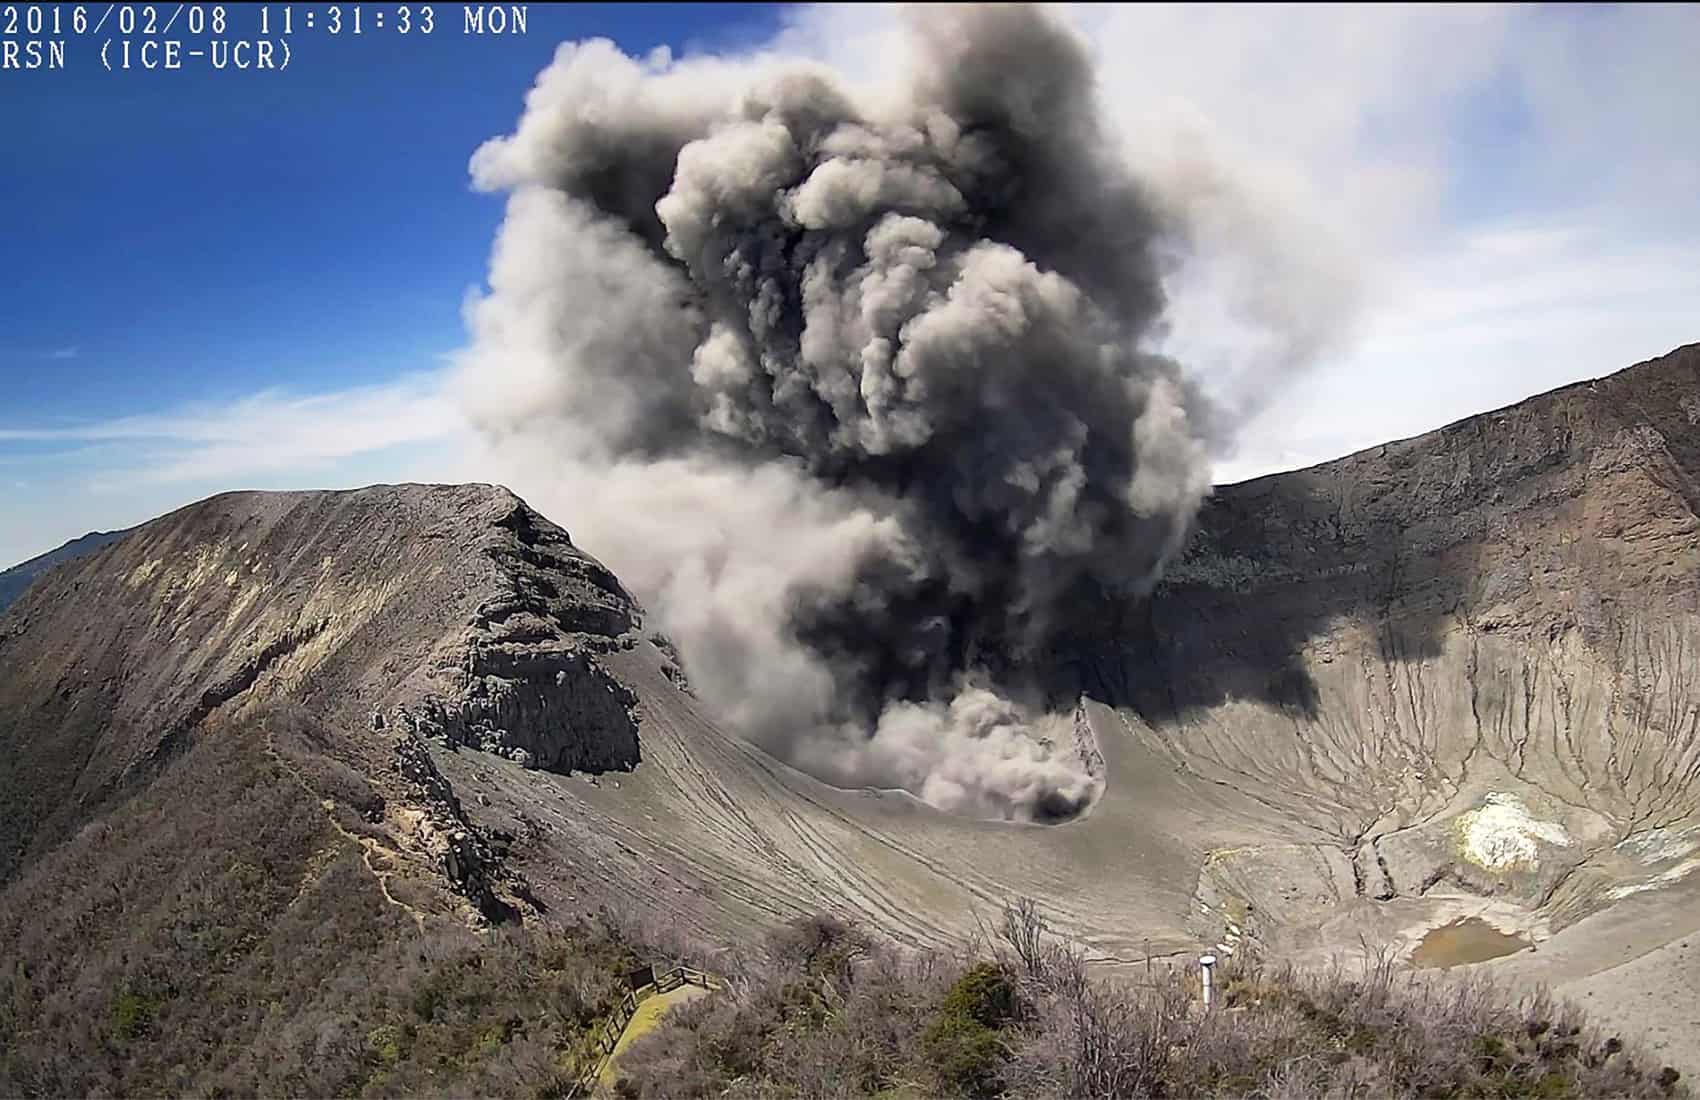 Ash, gas explosion at Costa Rica's Turrialba Volcano, on Feb. 8, 2016.